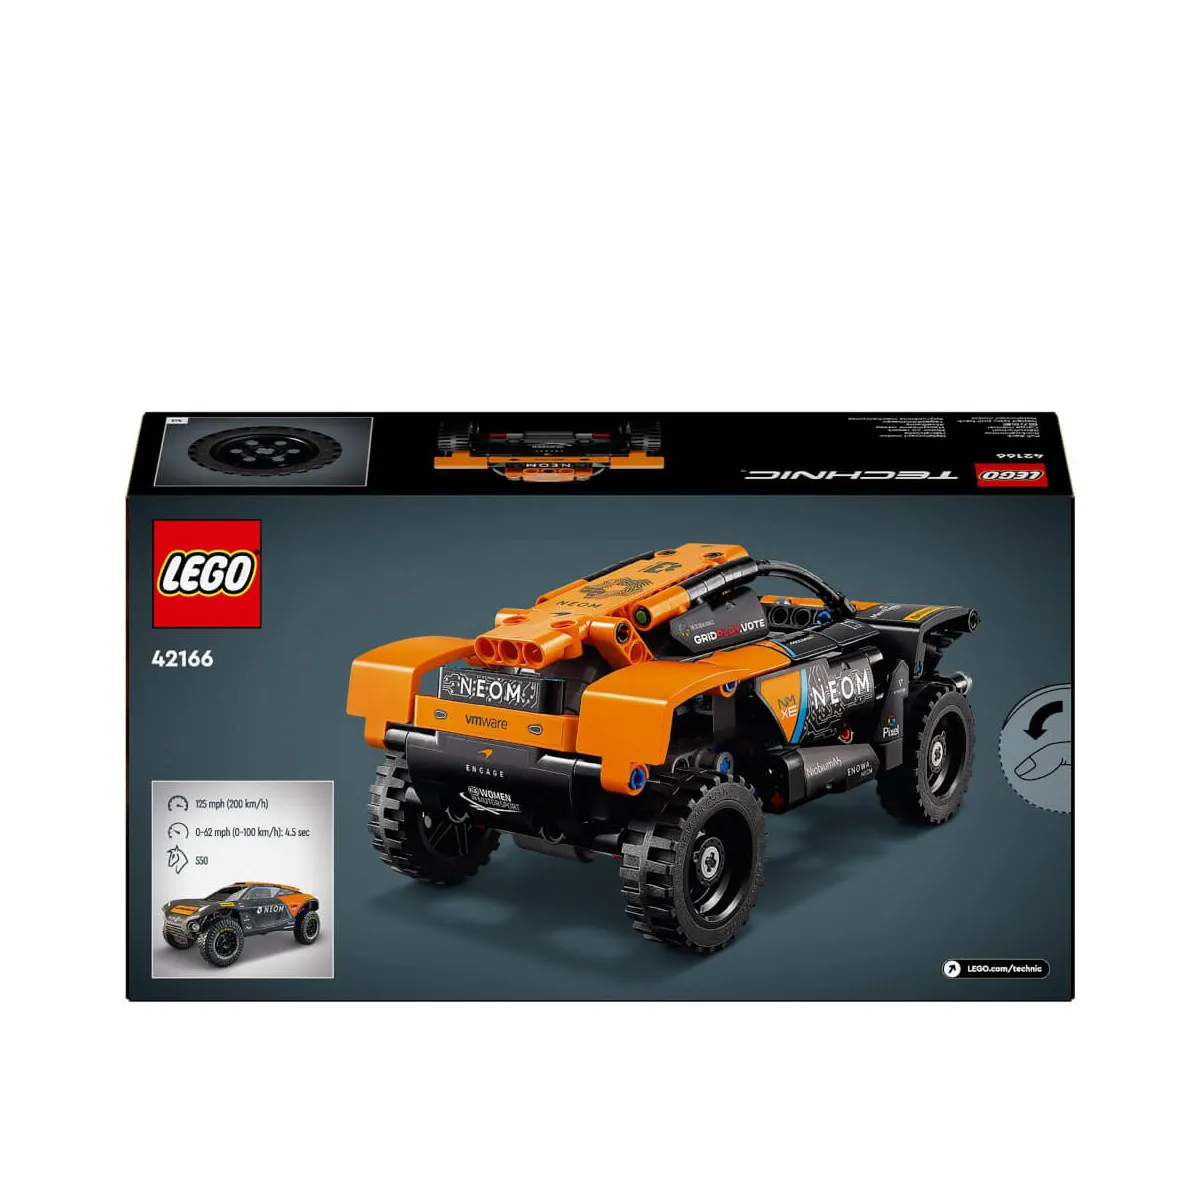 LEGO 42166 Neom Mclaren Extreme E Race Car